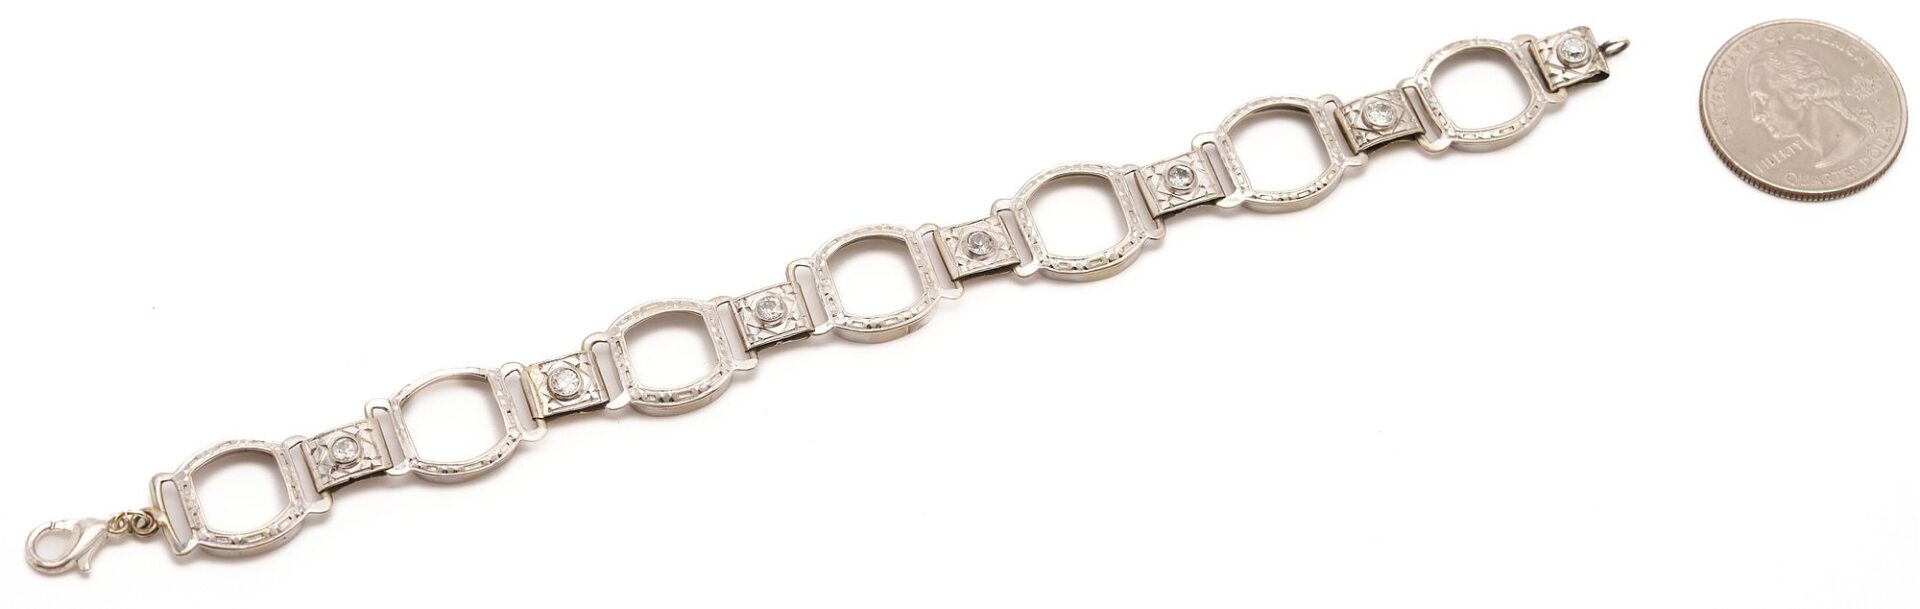 Lot 844: 14K Diamond Openwork Bracelet